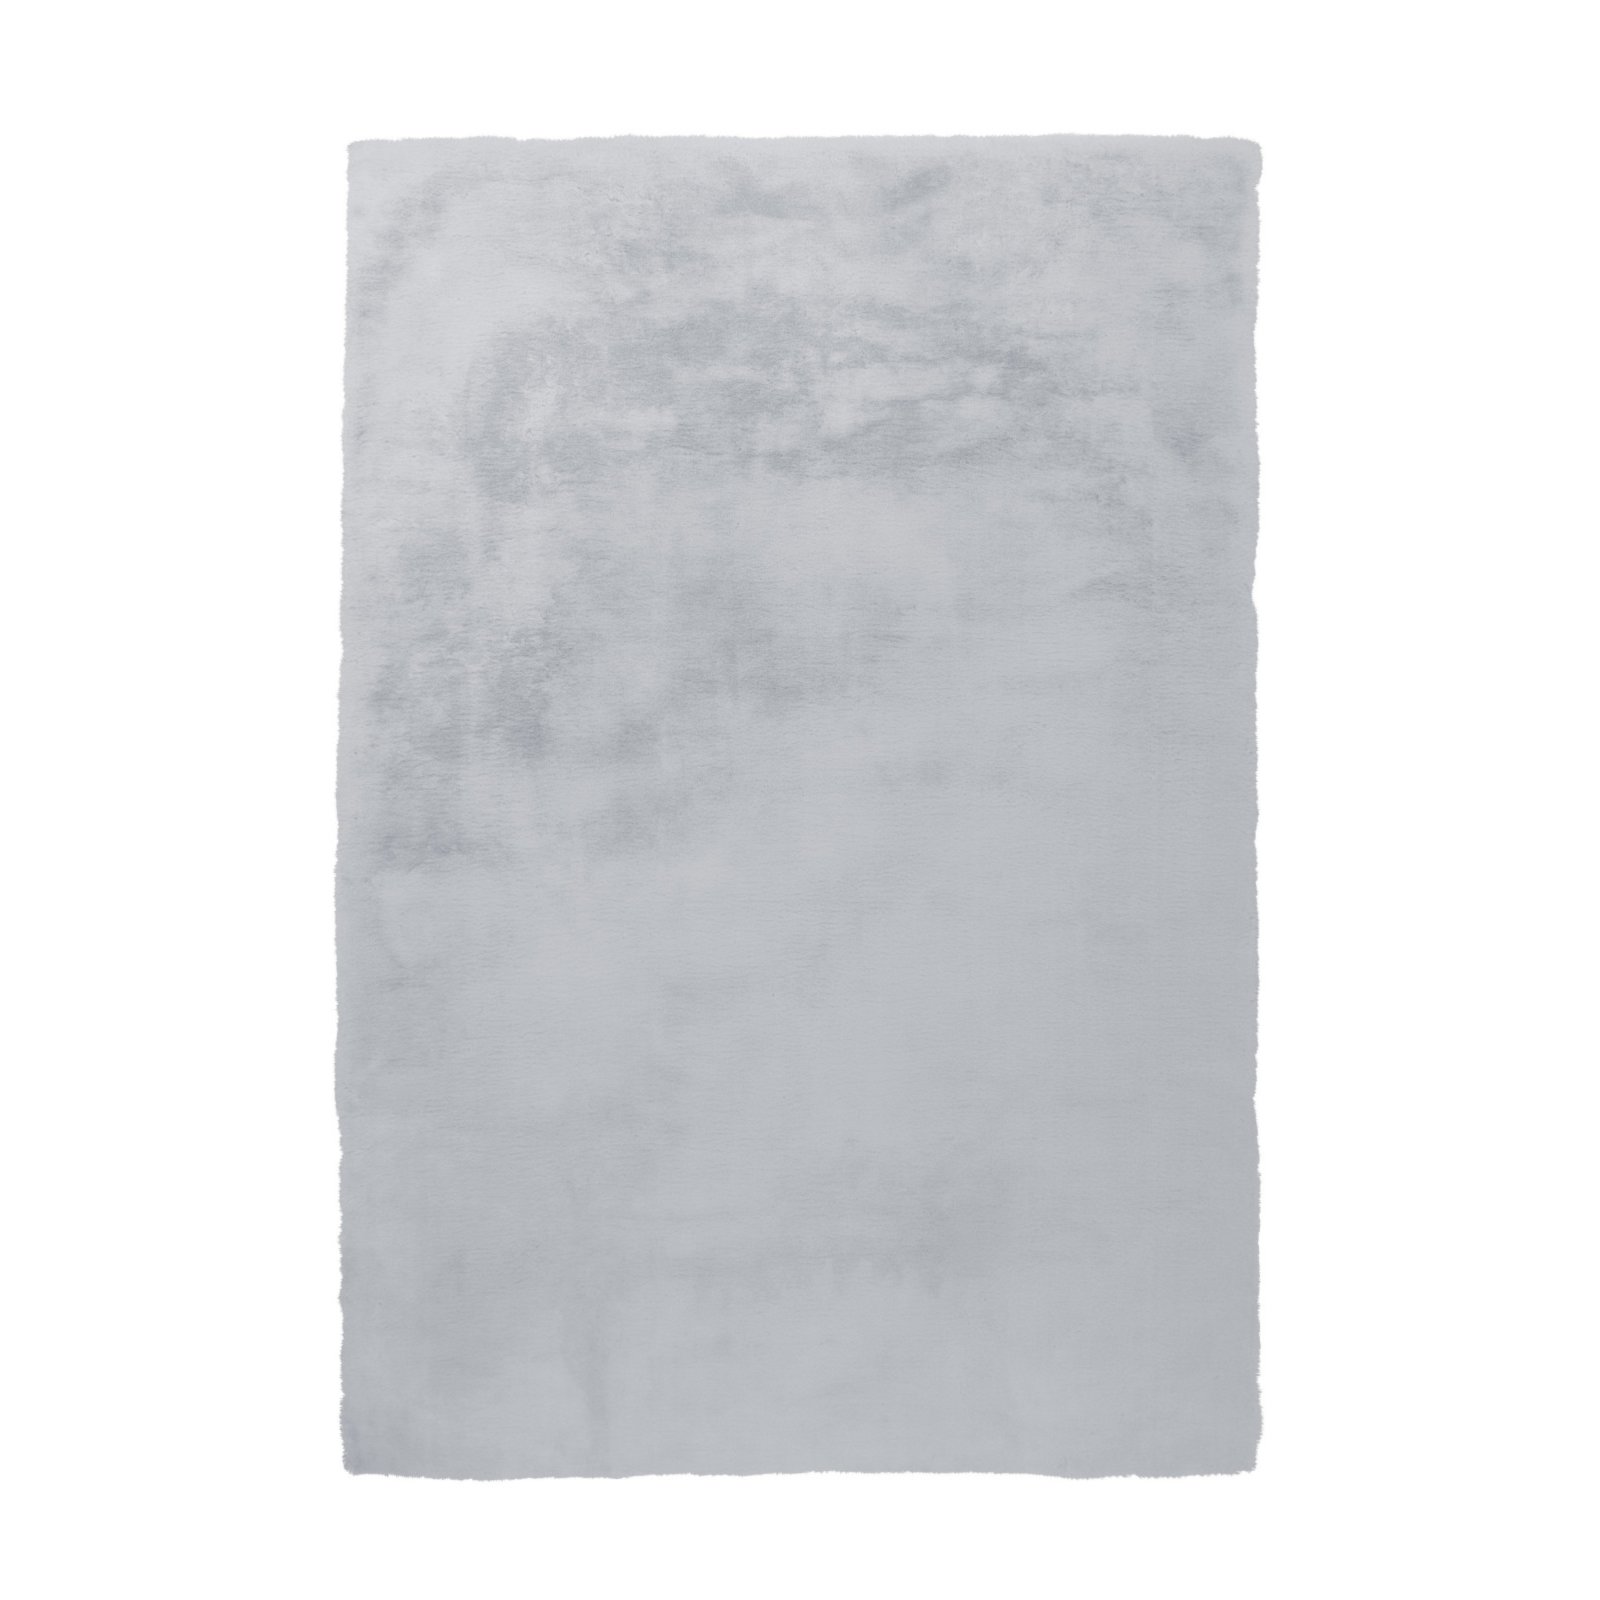 Kunstfell-Teppich - Kaninchenfell-Haptik - grau-blau - cm Online ROLLER kaufen 160x230 bei 